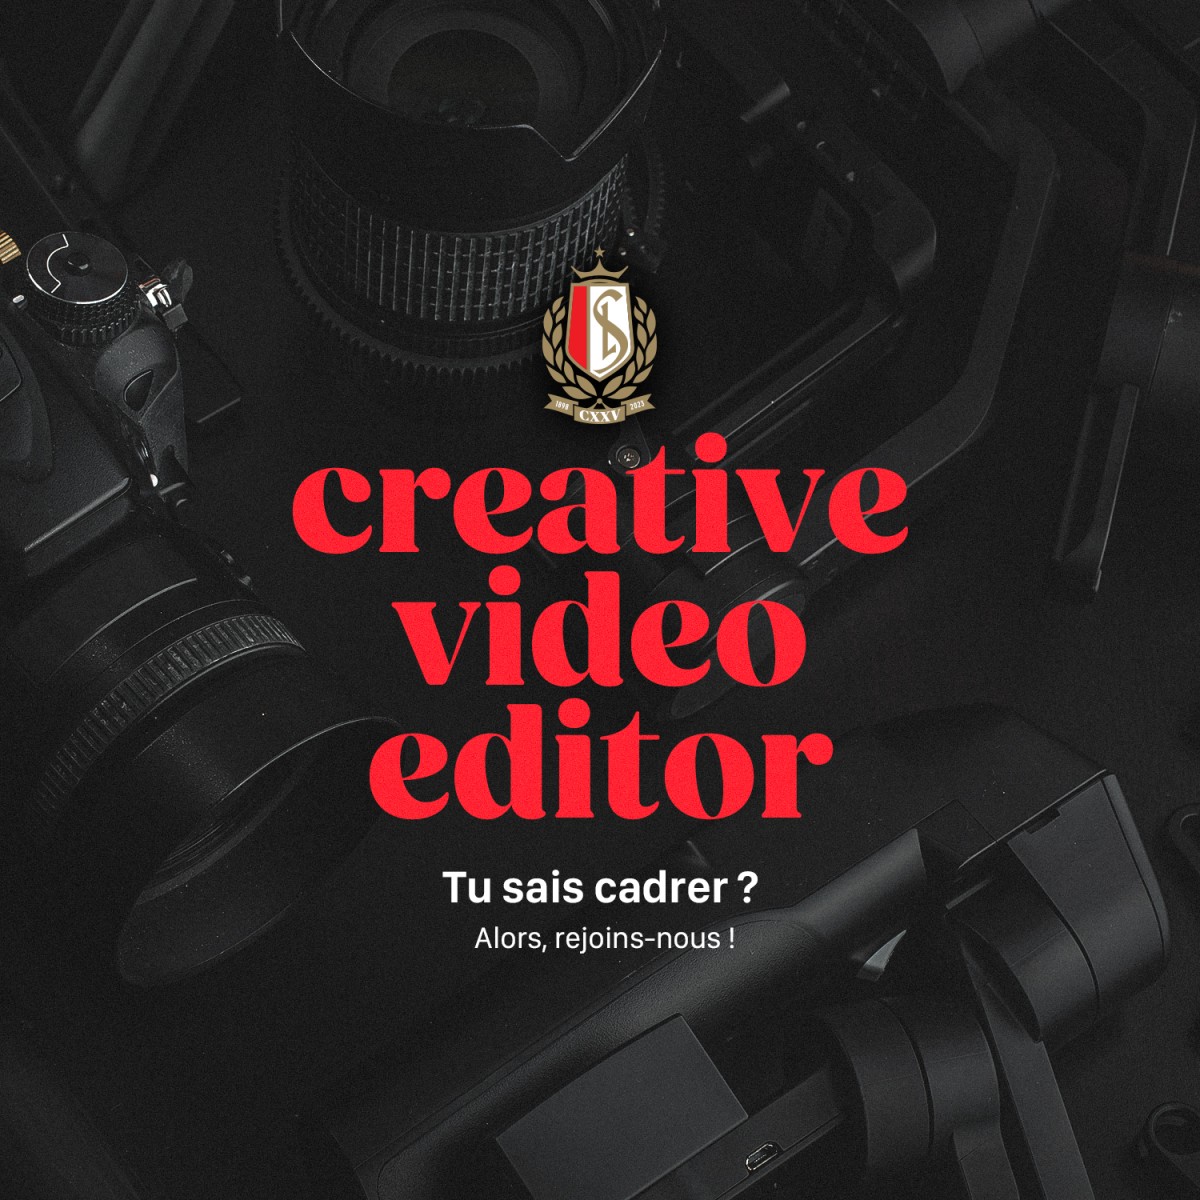 Creative Video Editor